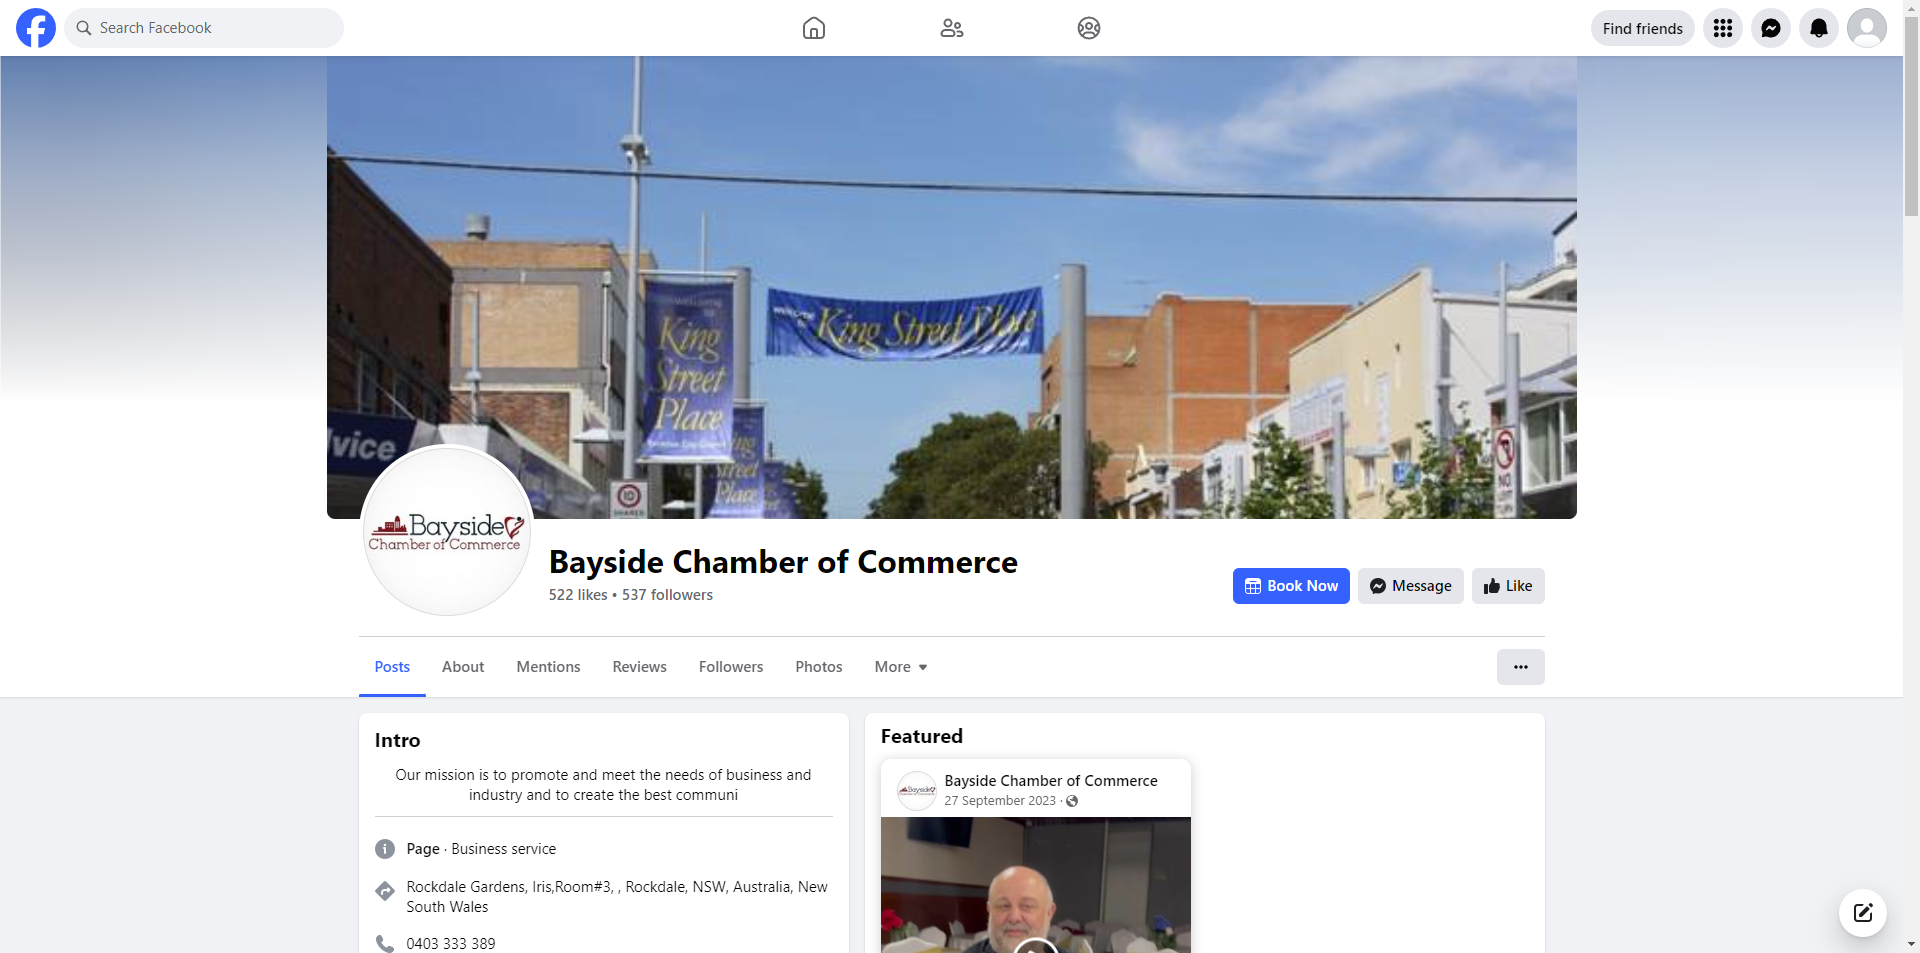 Bayside Chamber of Commerce